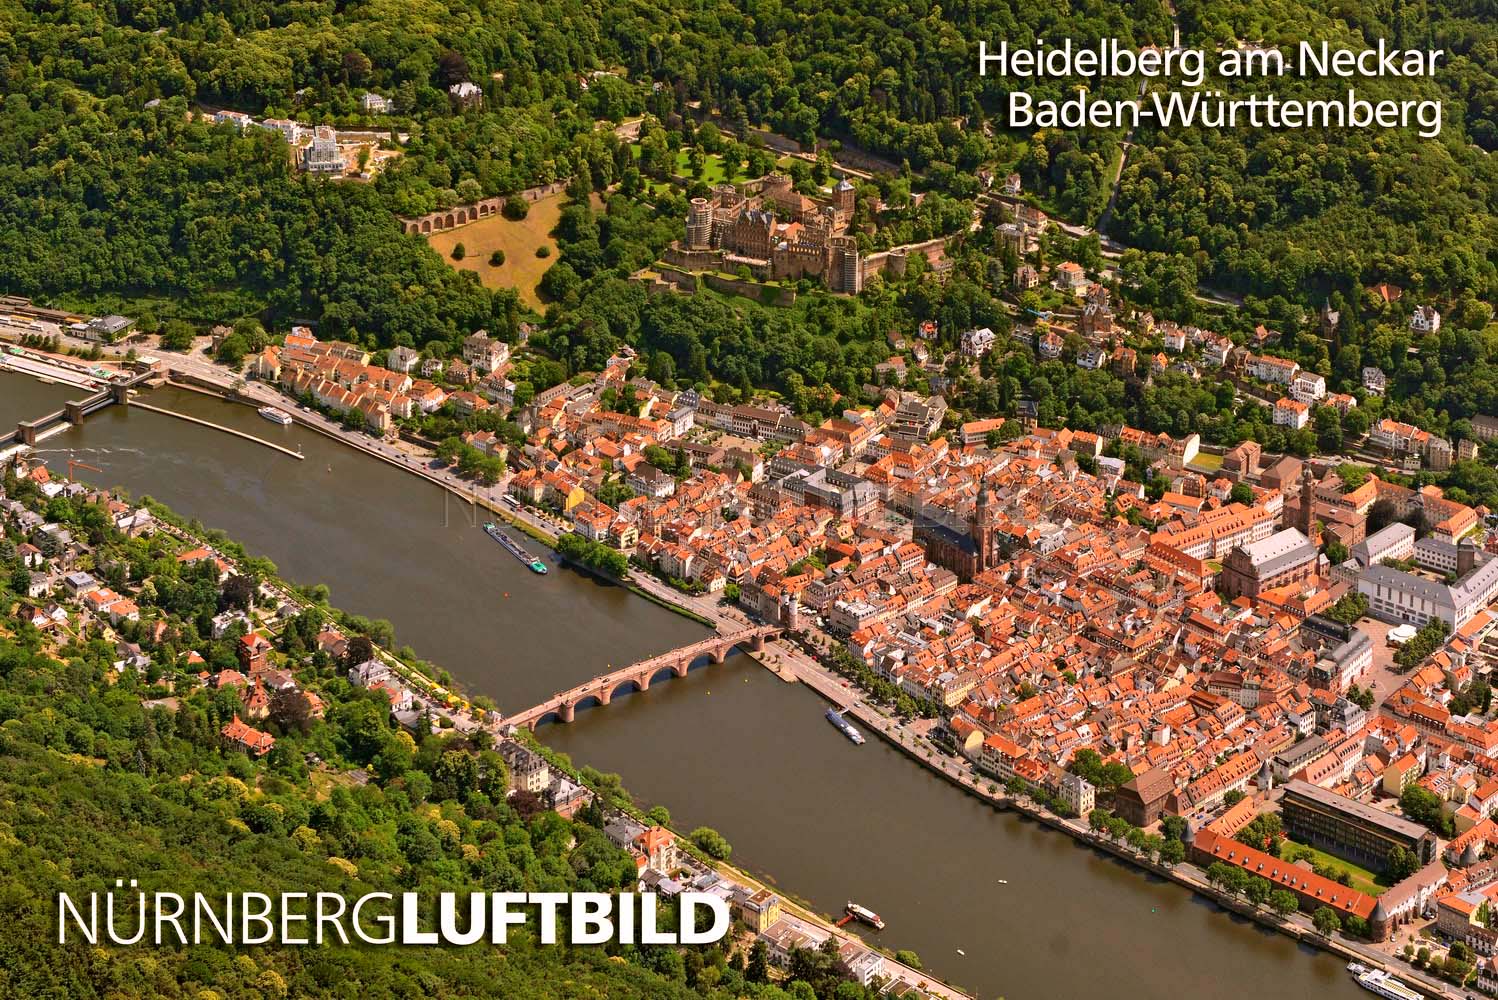 Heidelberg am Neckar, Baden-Württemberg